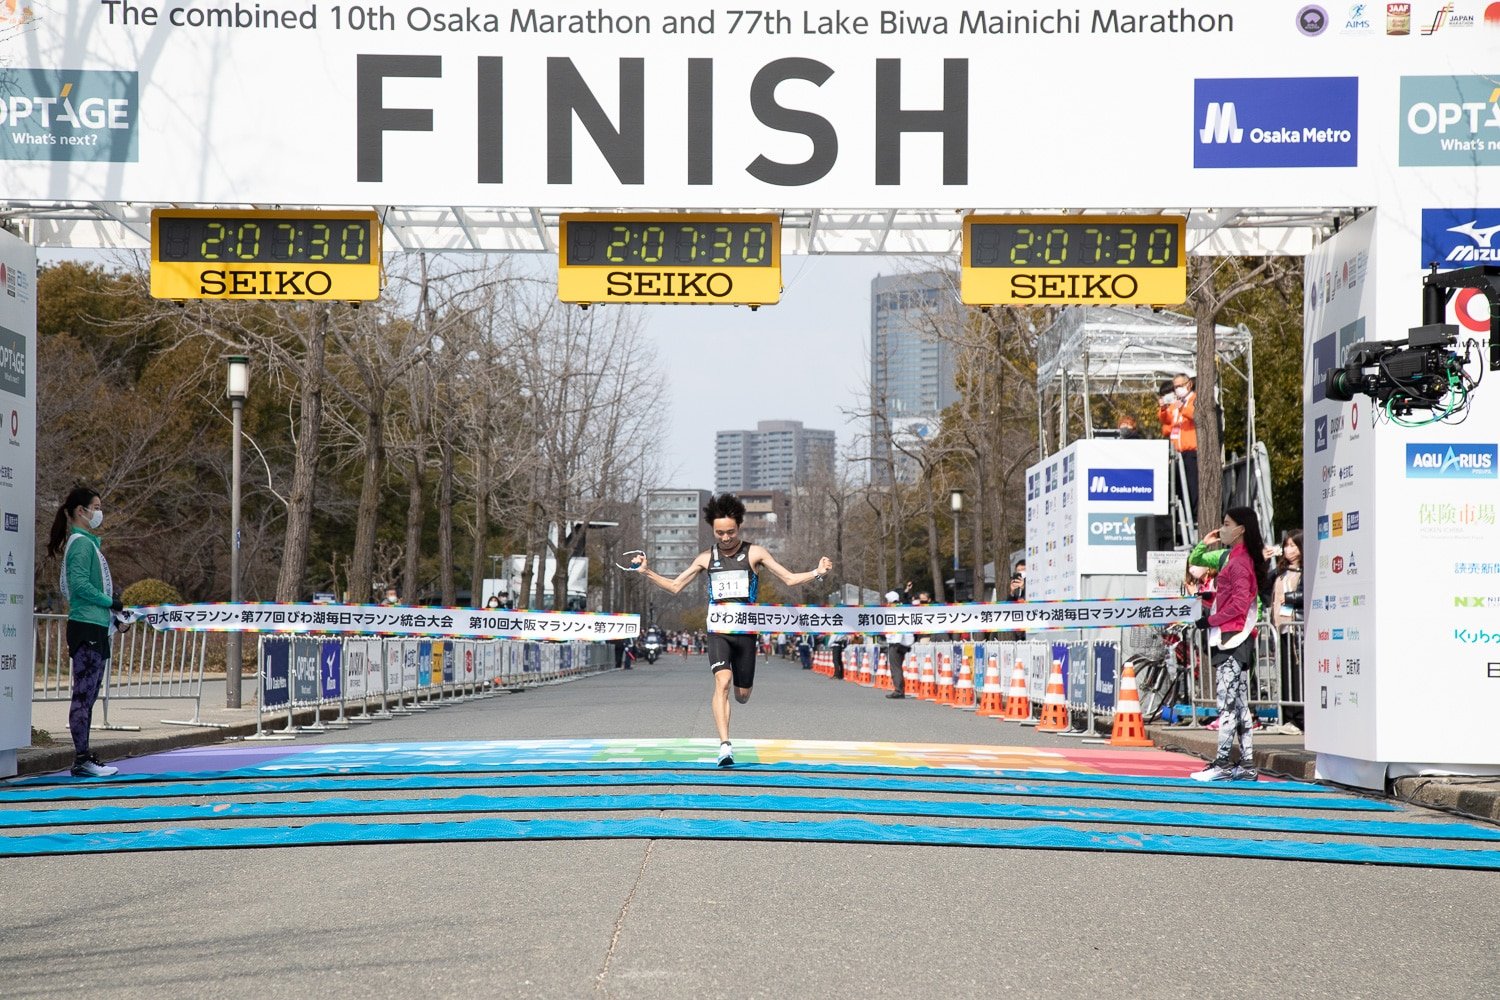 Everything You Need to Know About Osaka's Marathon